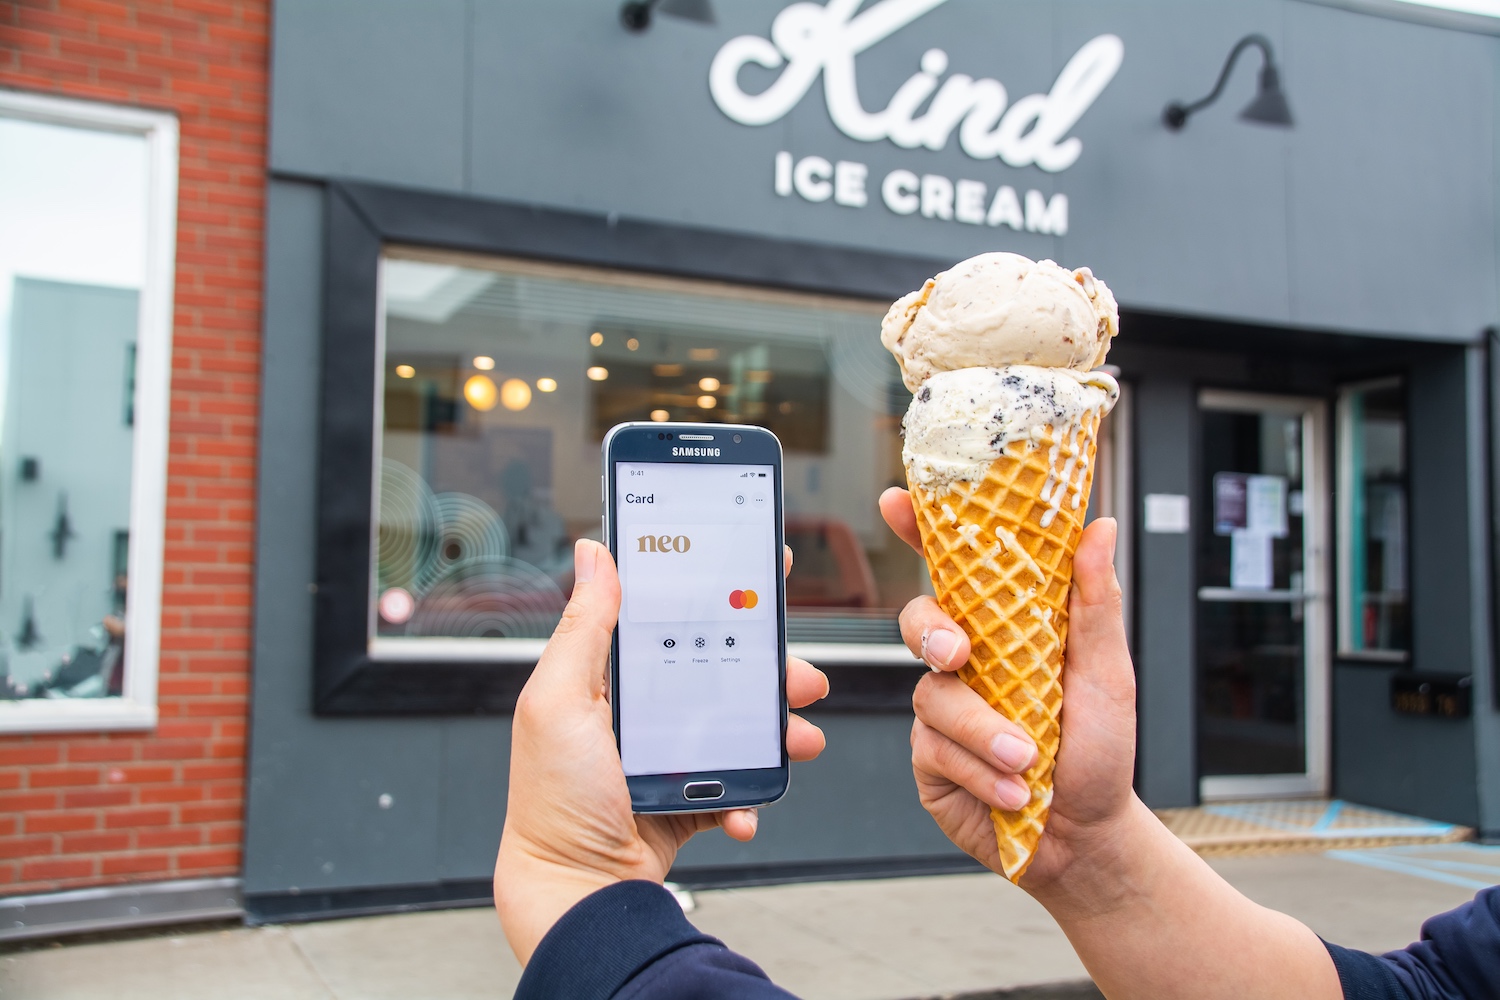 kind ice cream neo financial